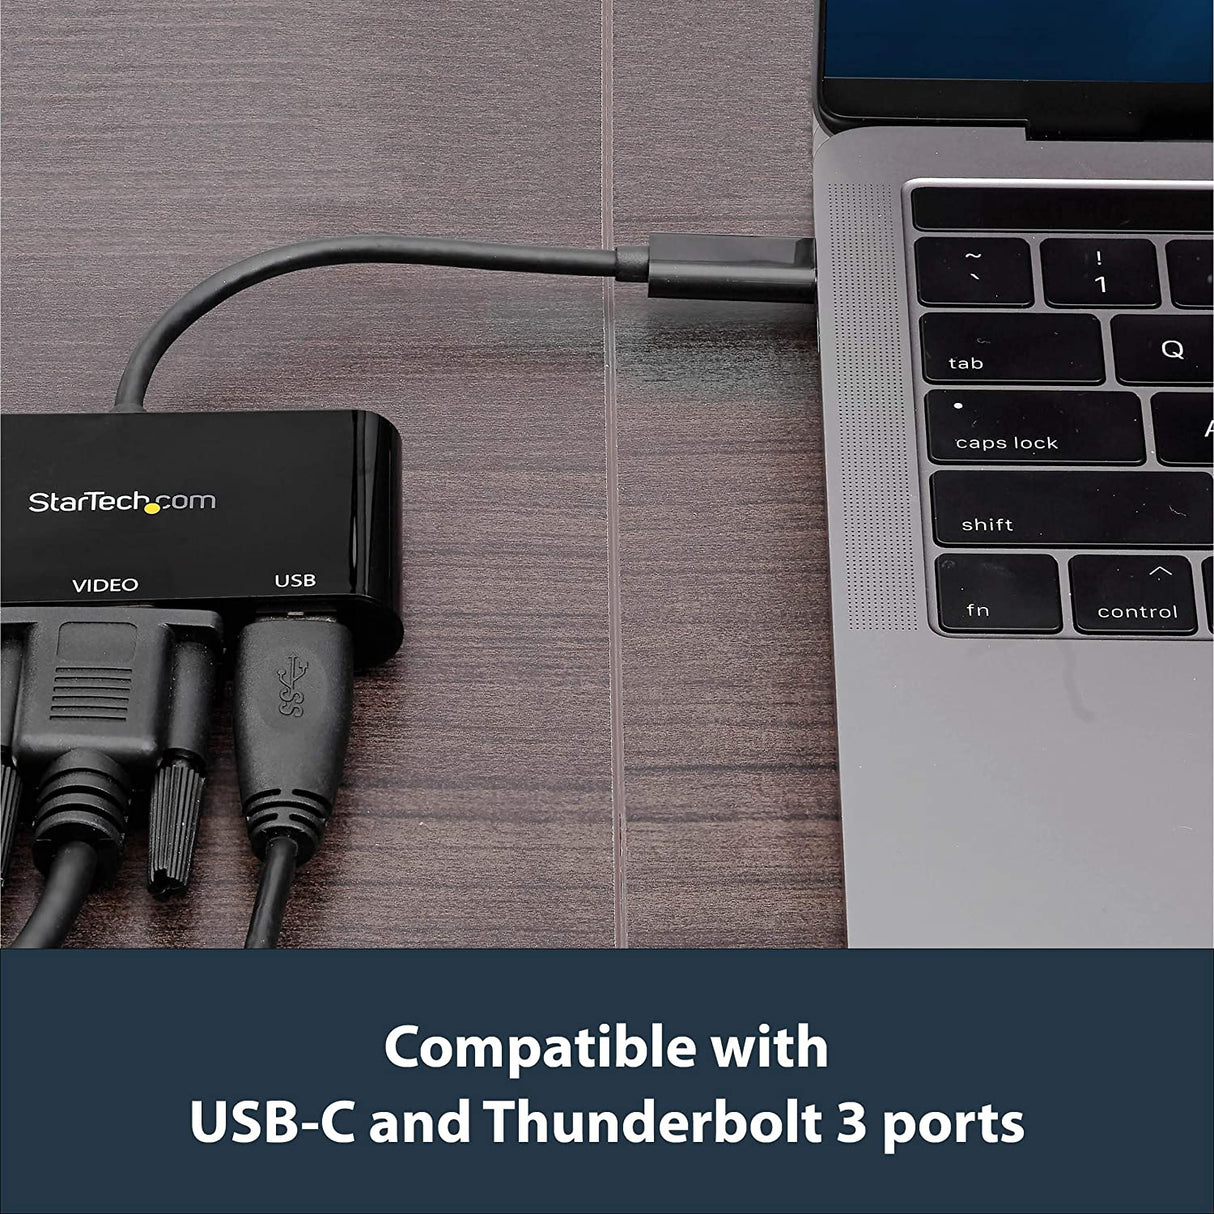 StarTech.com USB-C VGA Multiport Adapter - USB-A Port - with Power Delivery (USB PD) - USB C Adapter Converter - USB C Dongle (CDP2VGAUACP) 1x USB-A 3.0 | VGA